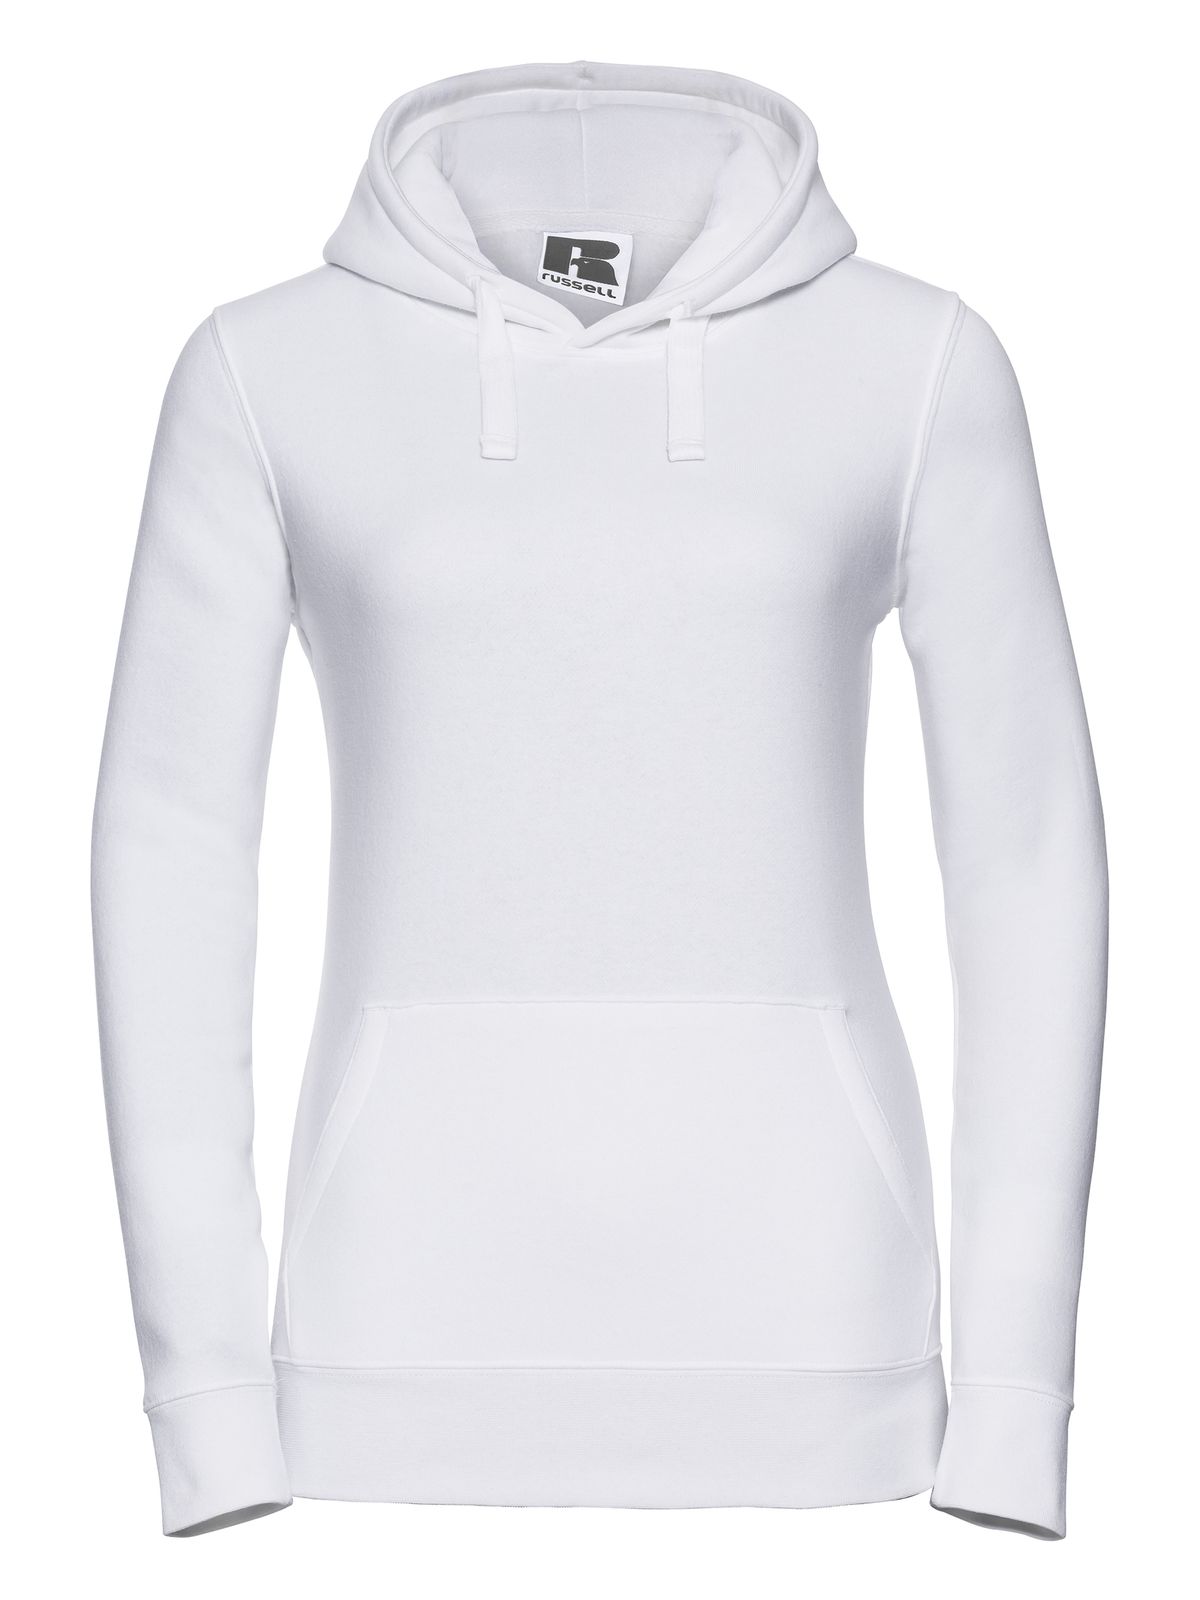 ladies-authentic-hooded-sweat-white.webp